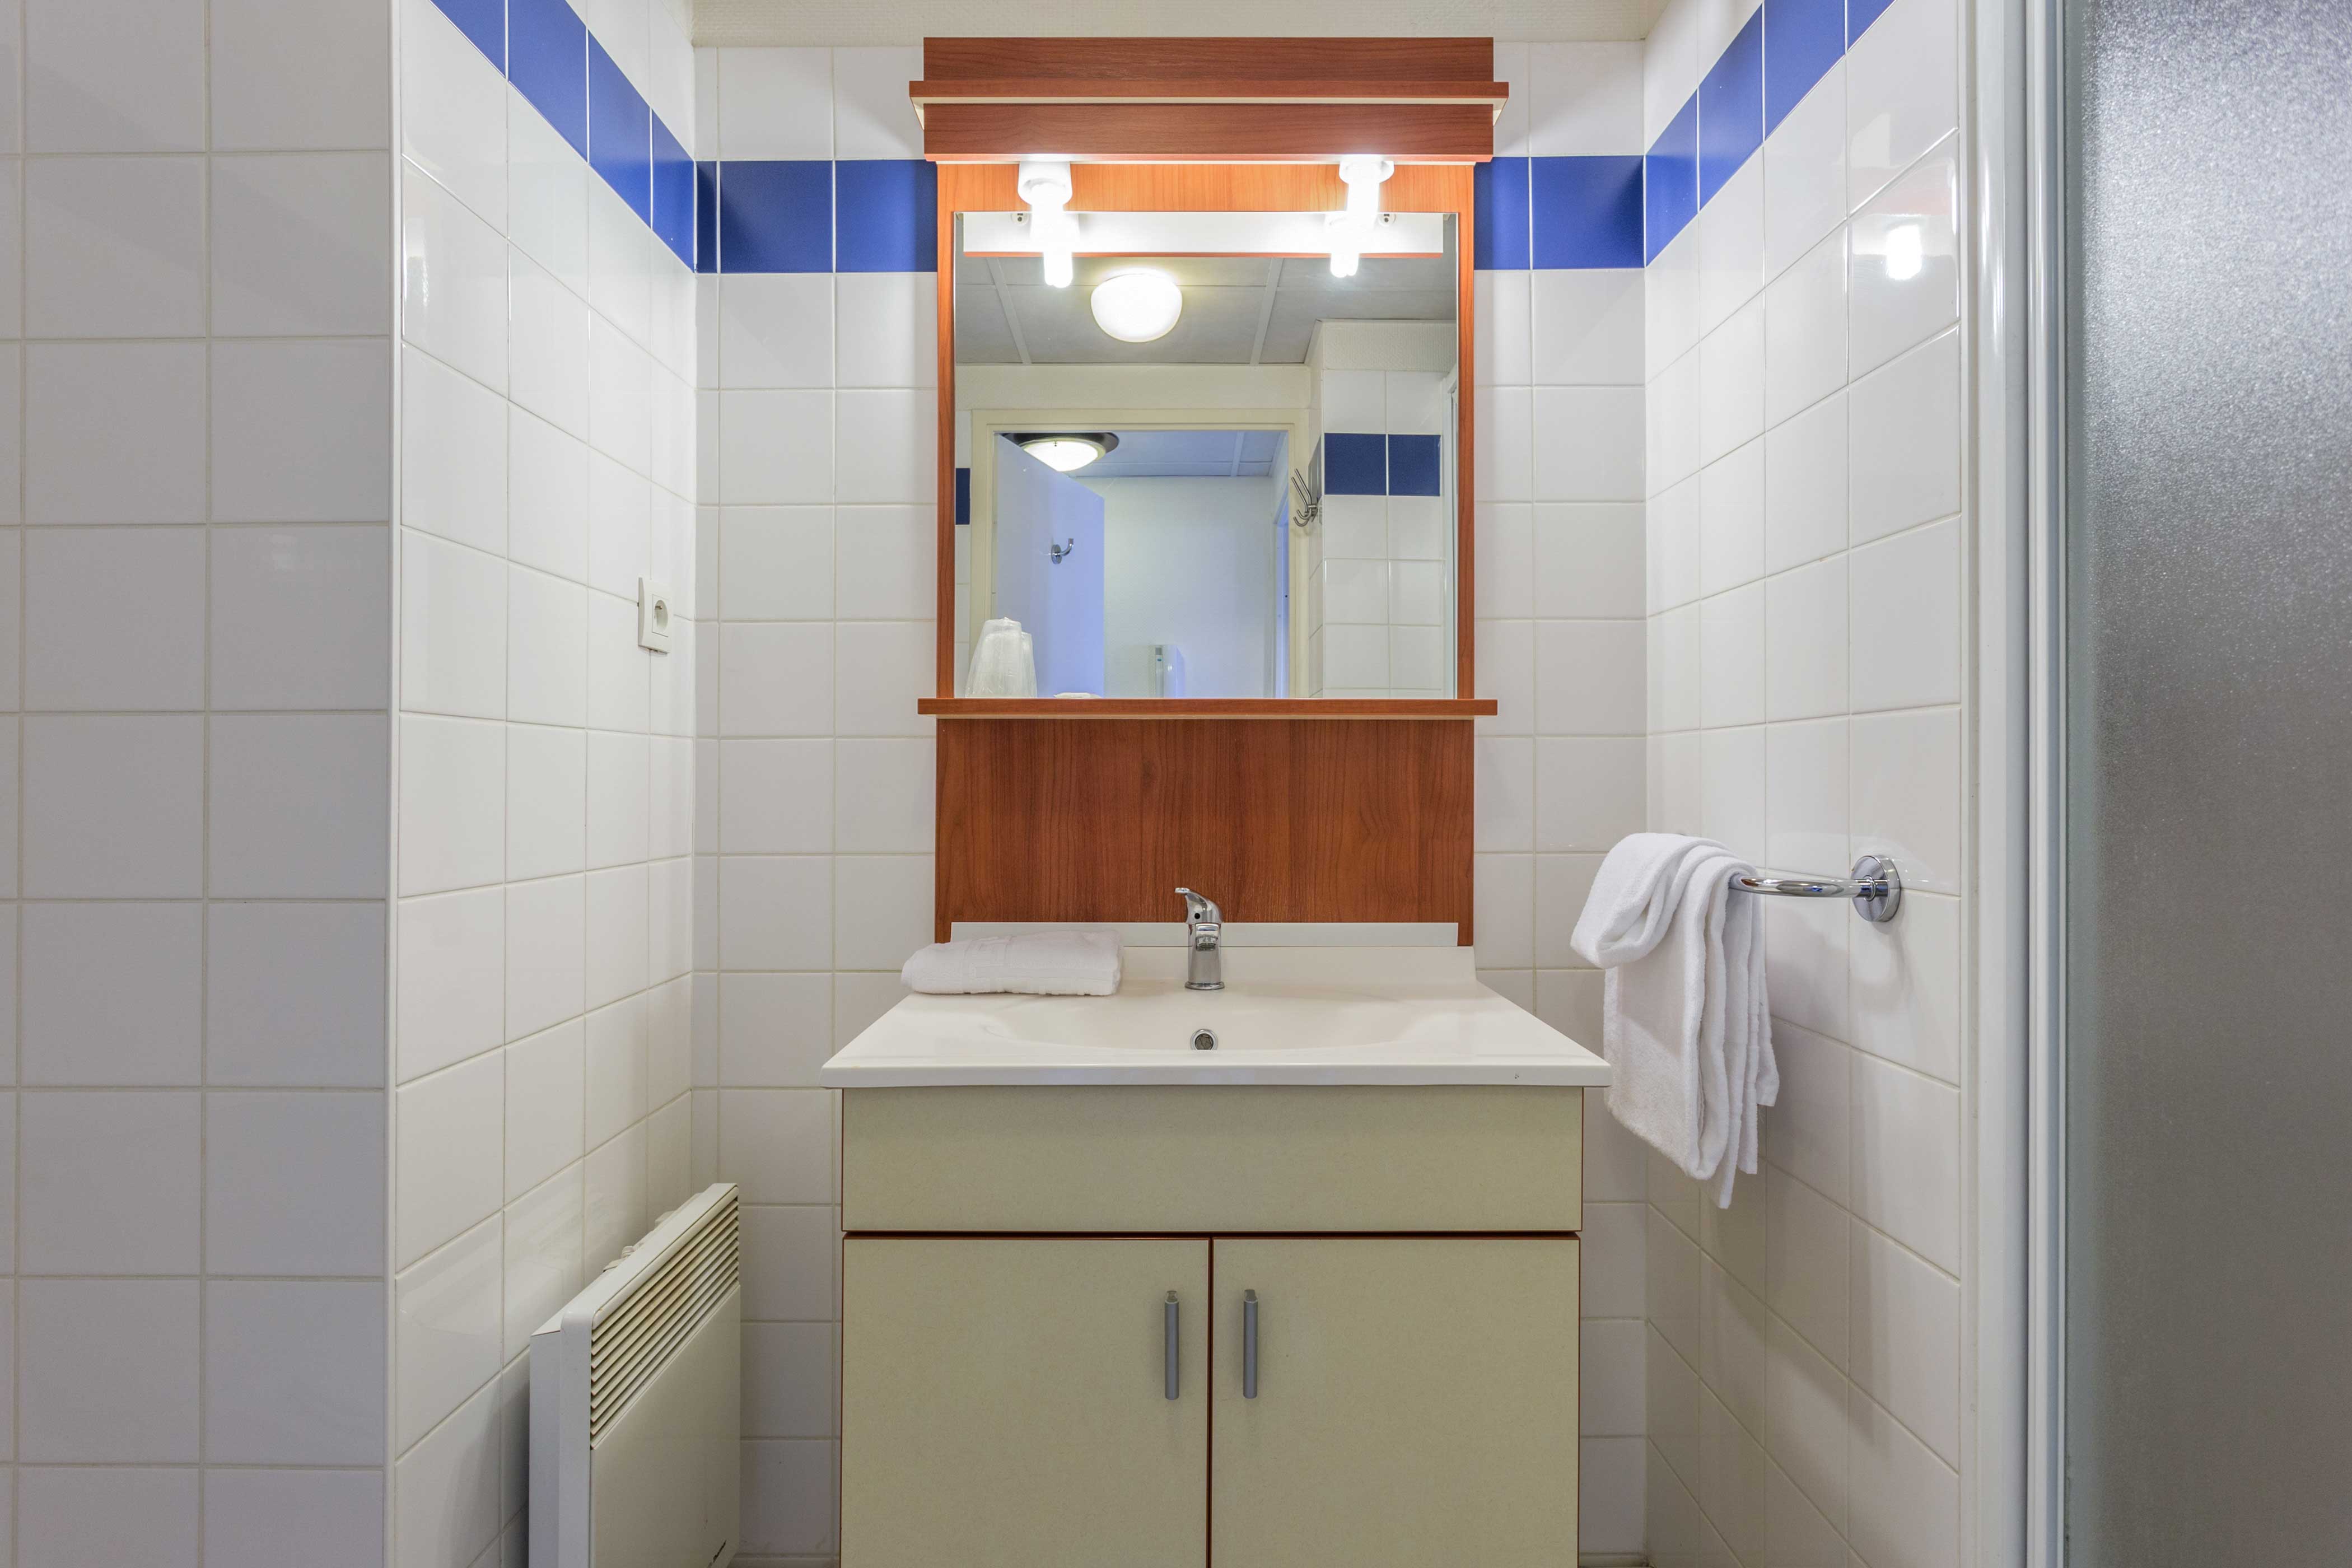 T2 - Bathroom Amenities